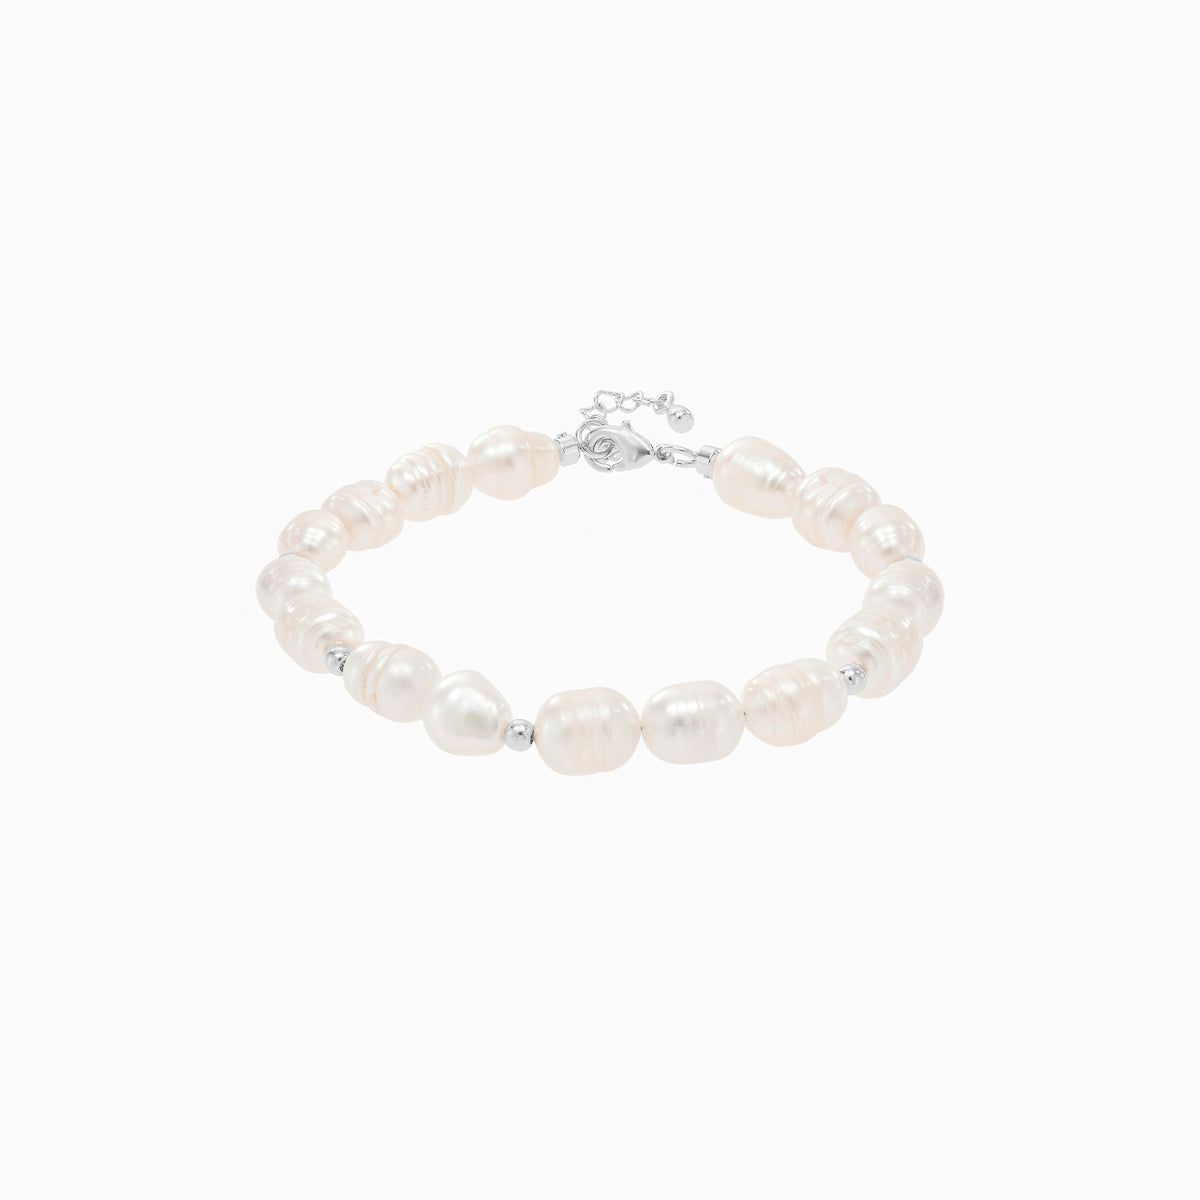 Black and White pearl bracelet